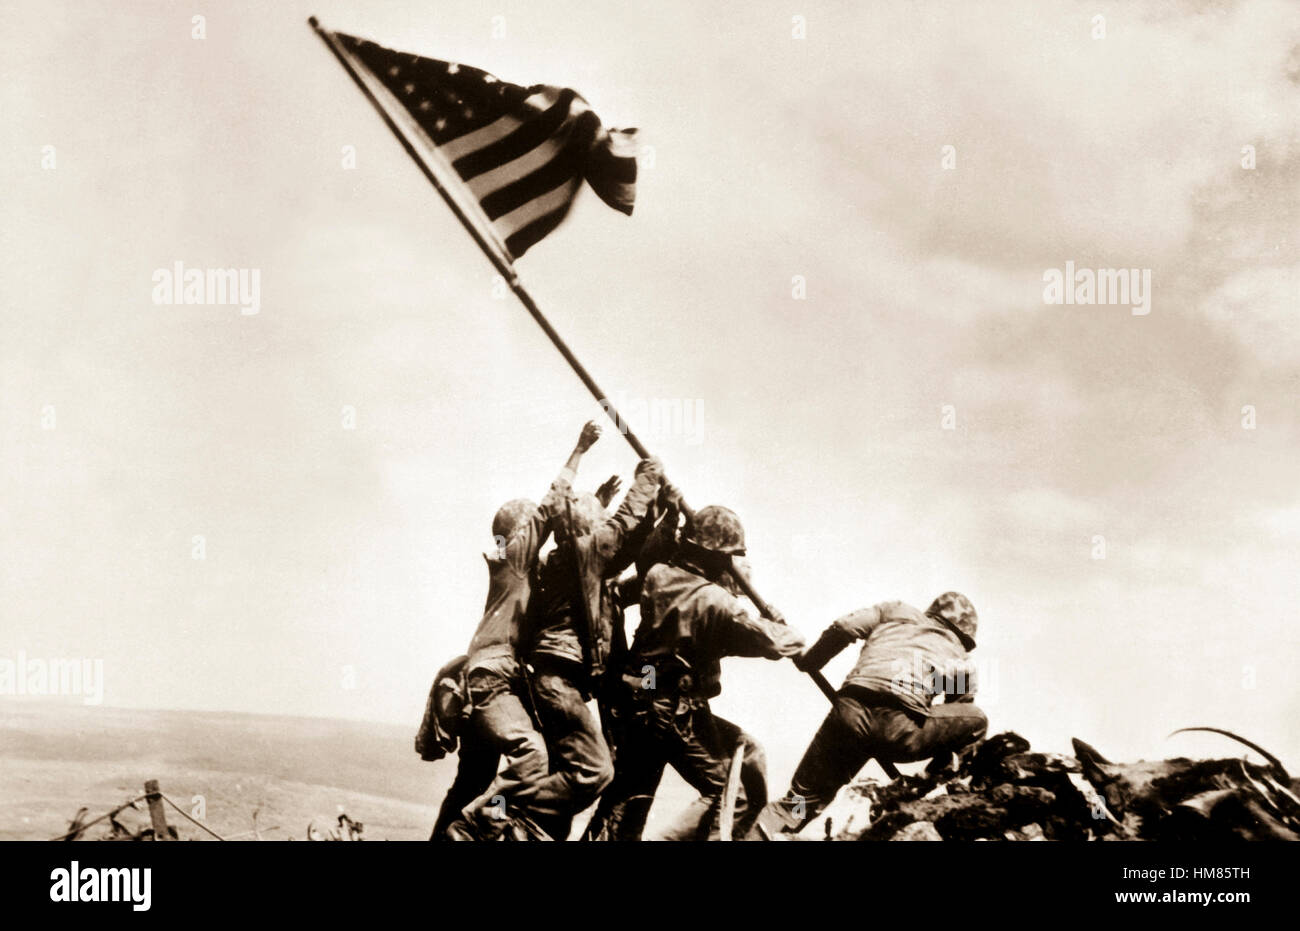 Flag raising on Iwo Jima.  February 23, 1945.  Joe Rosenthal, Associated Press.  (Navy) NARA FILE #:  080-G-413988 WAR & CONFLICT BOOK #:  1221 Stock Photo